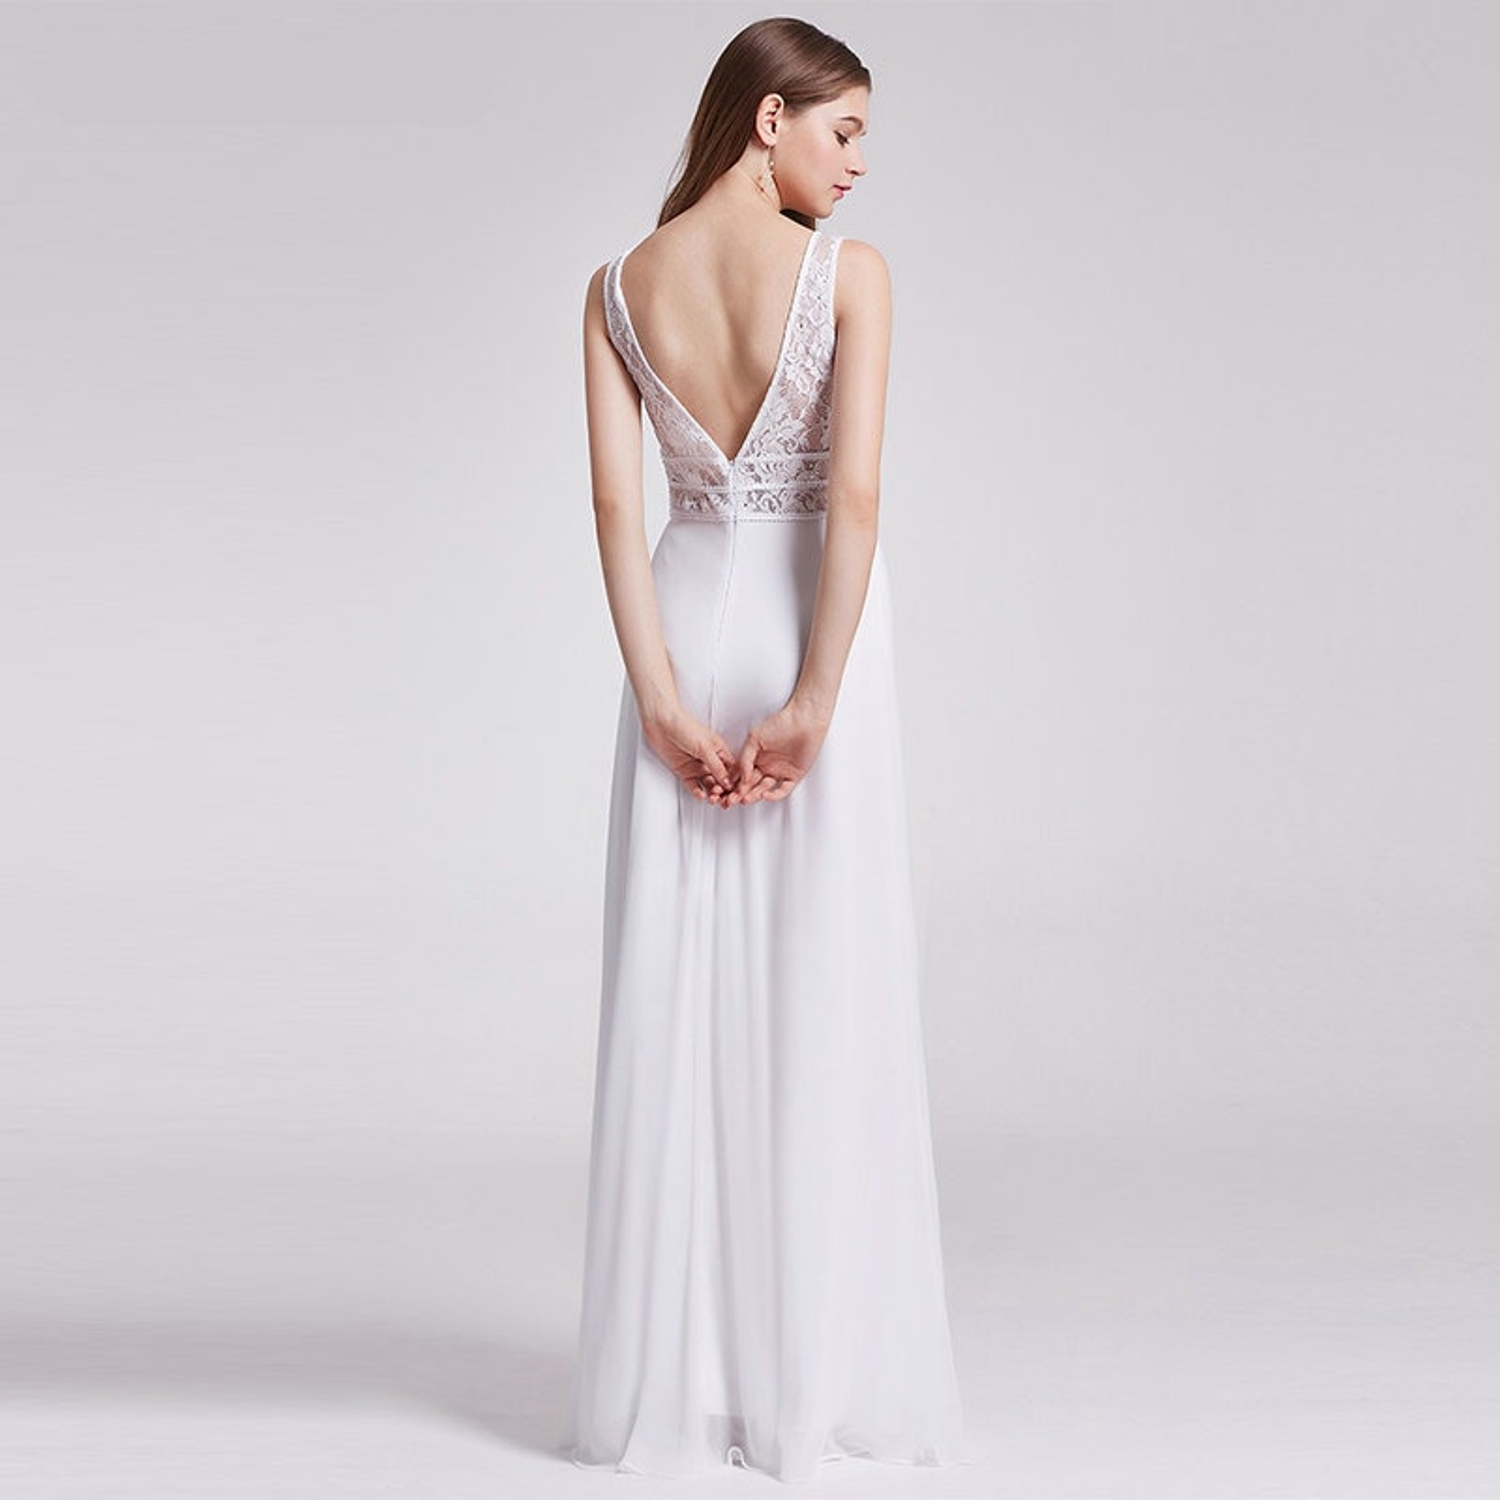 Simple backless wedding dress